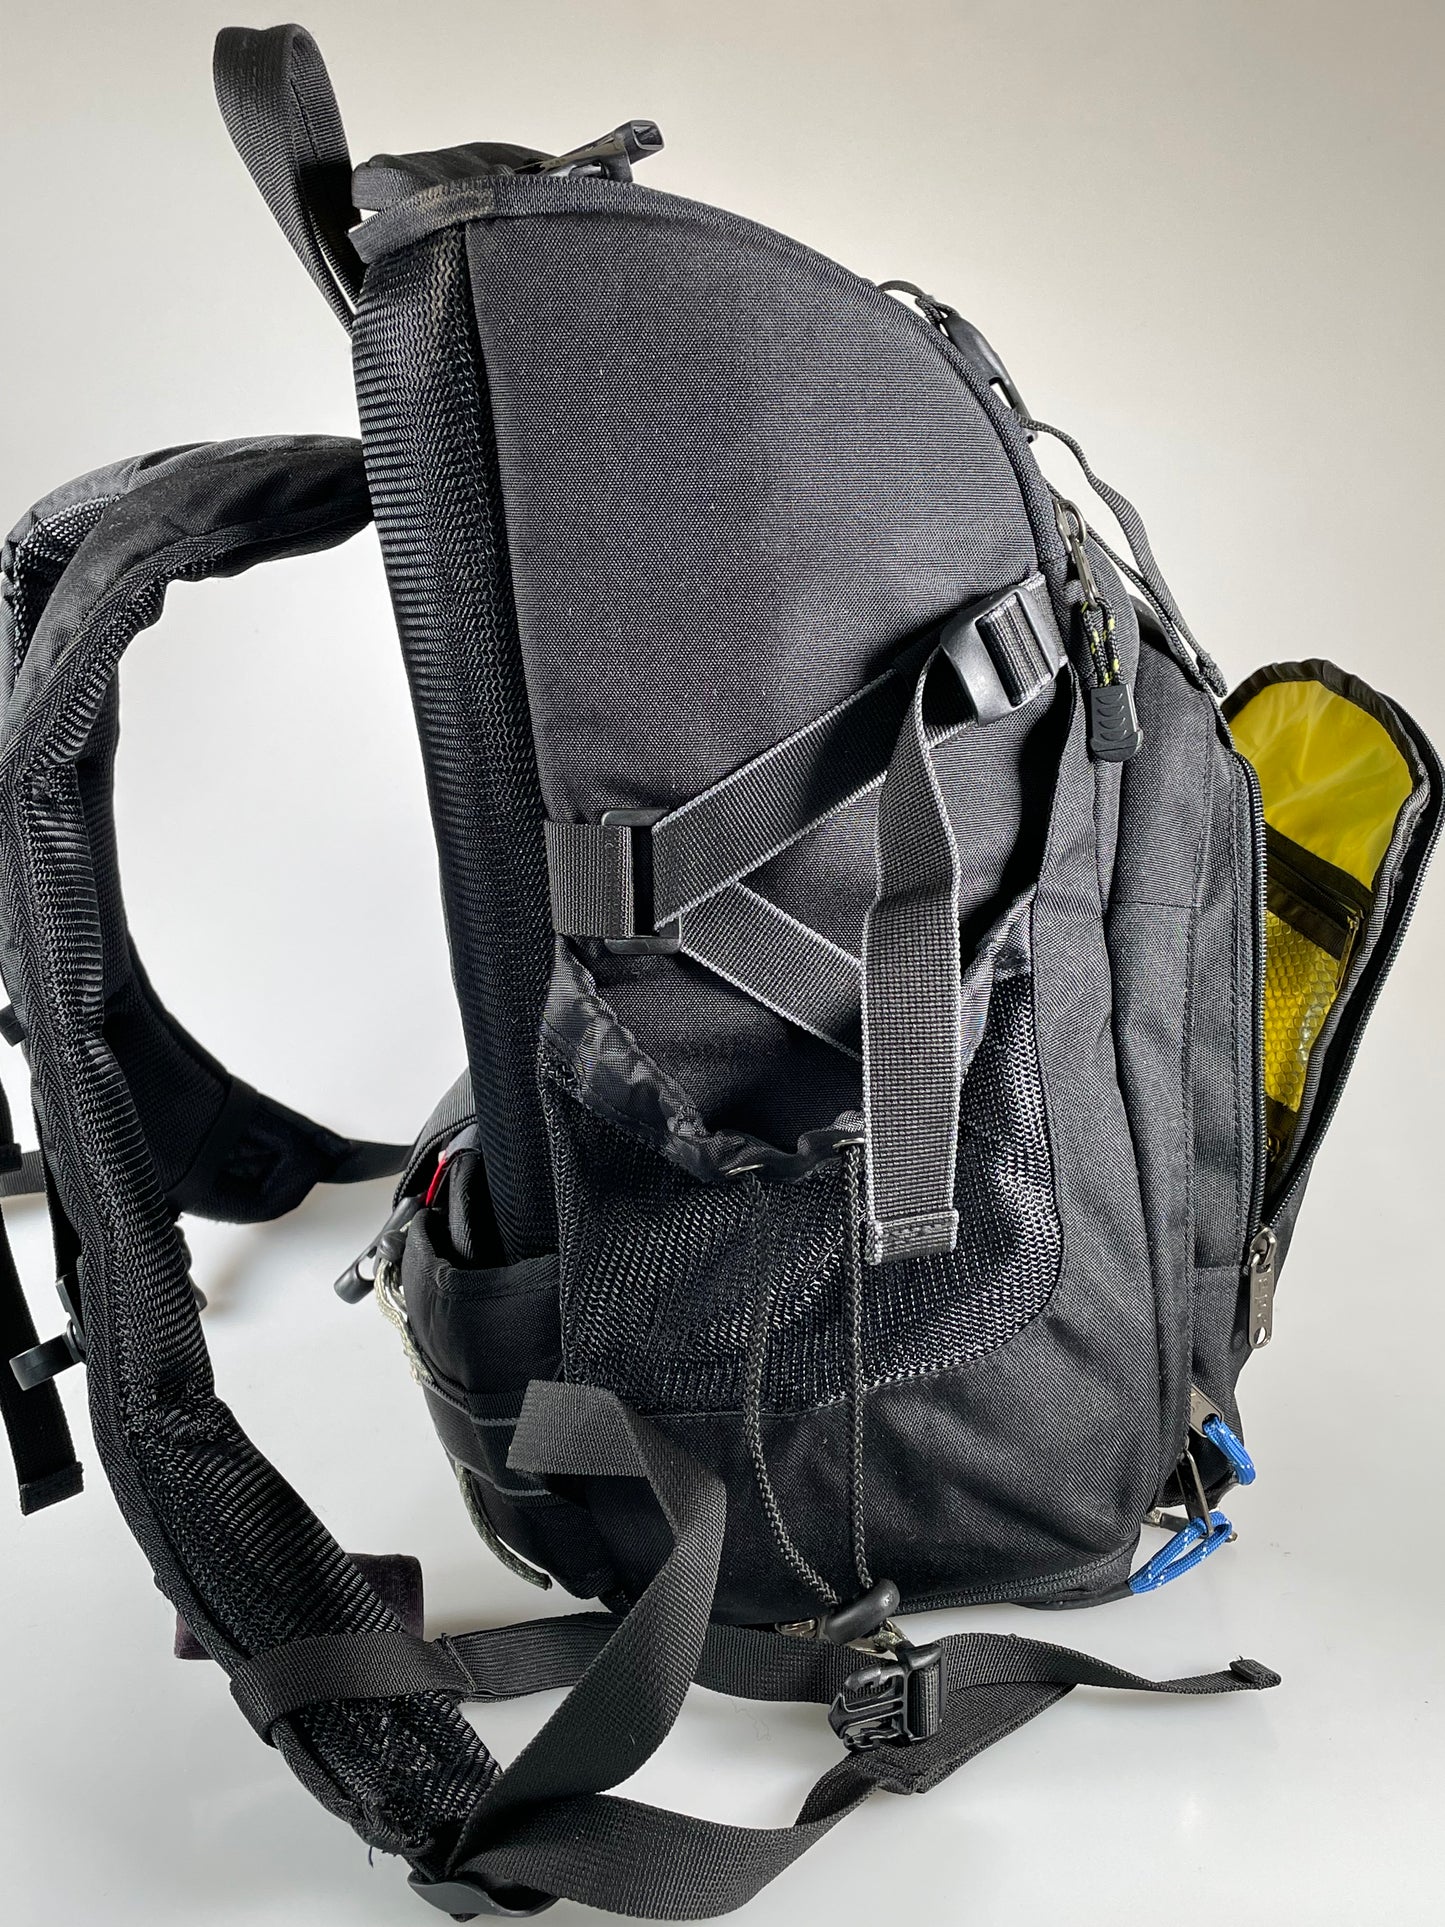 Ape CASE Professional Photographer camera Backpack Bag Black